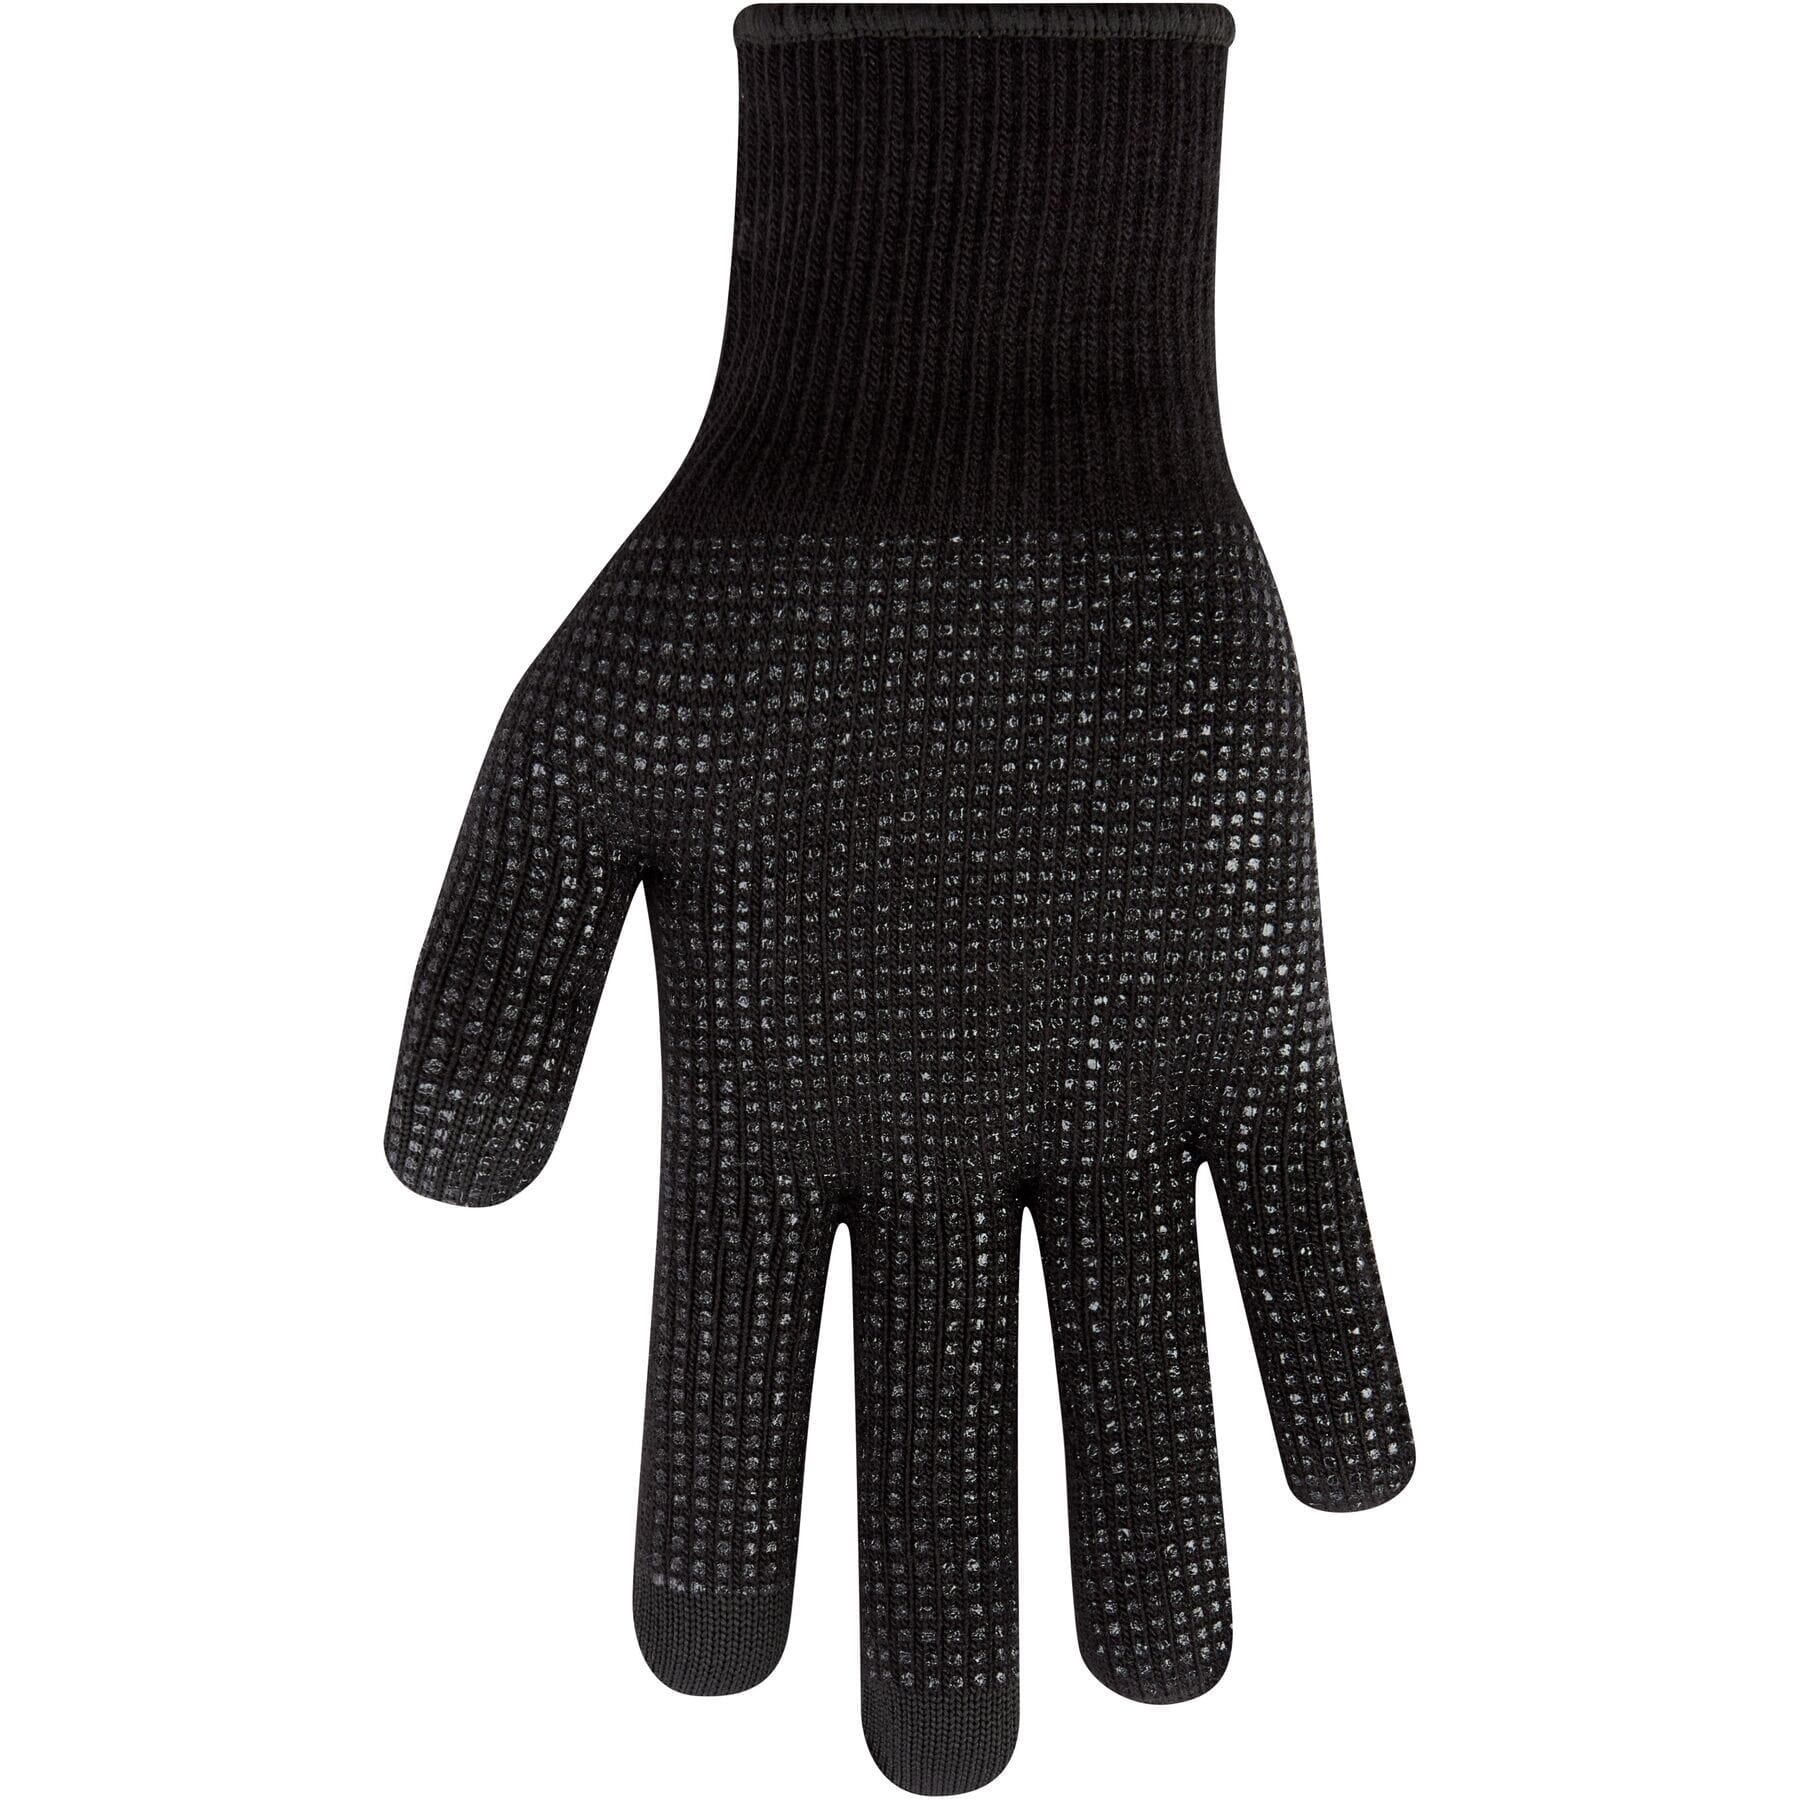 HUMP Pocket Thermal Glove - Black - Medium - Large 2/2